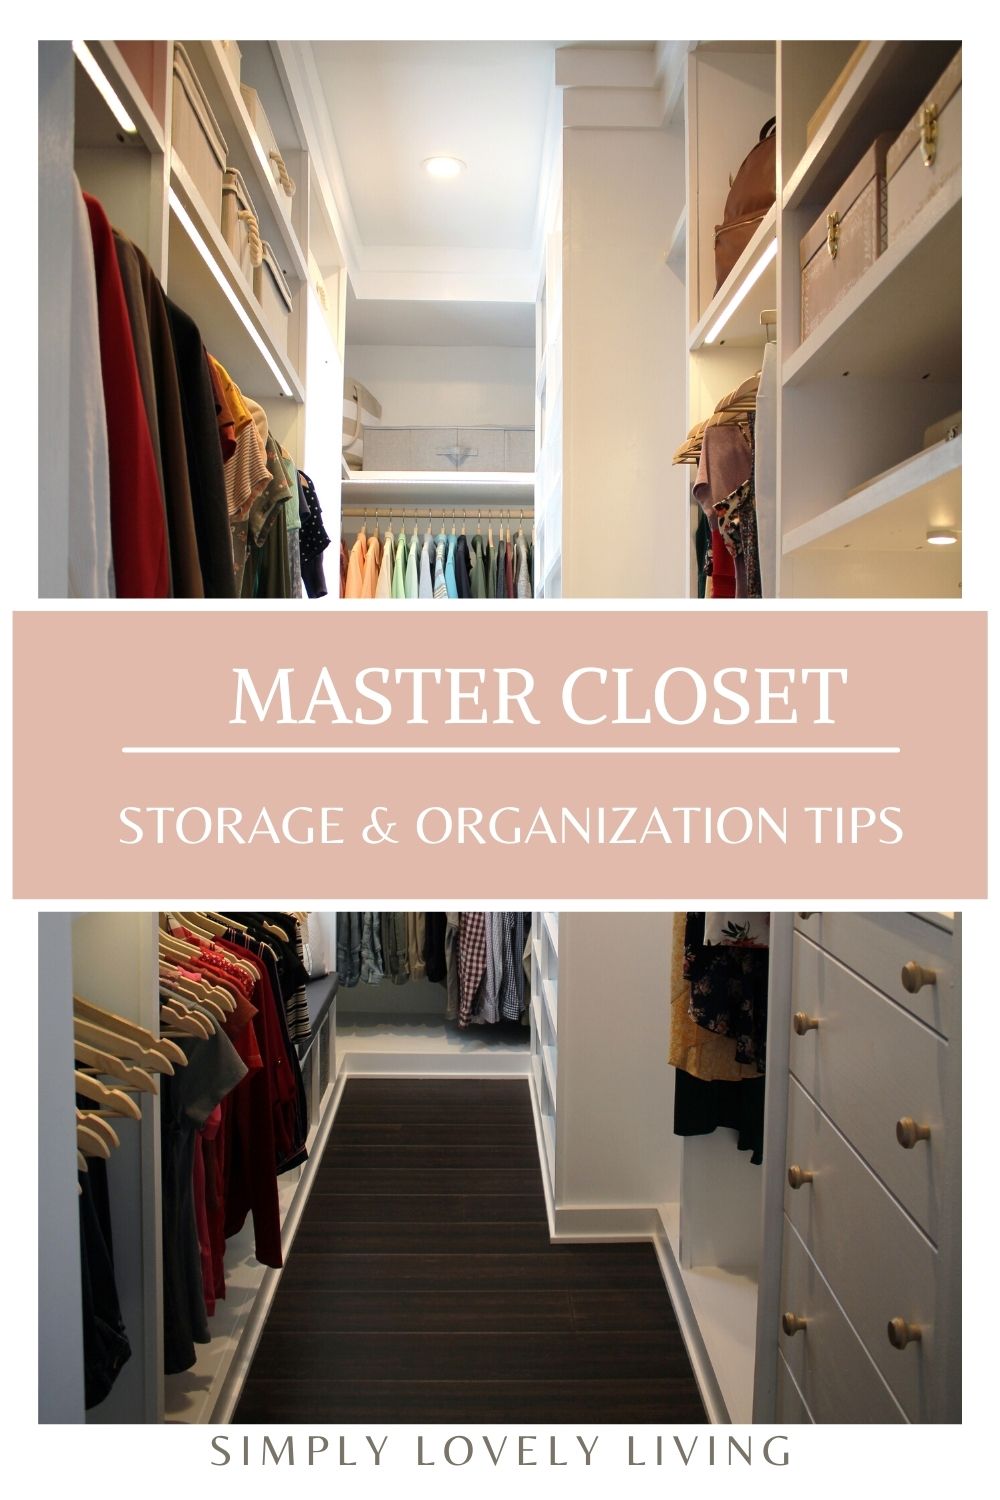 Master Closet Storage & Organization Pinterest Pin Image